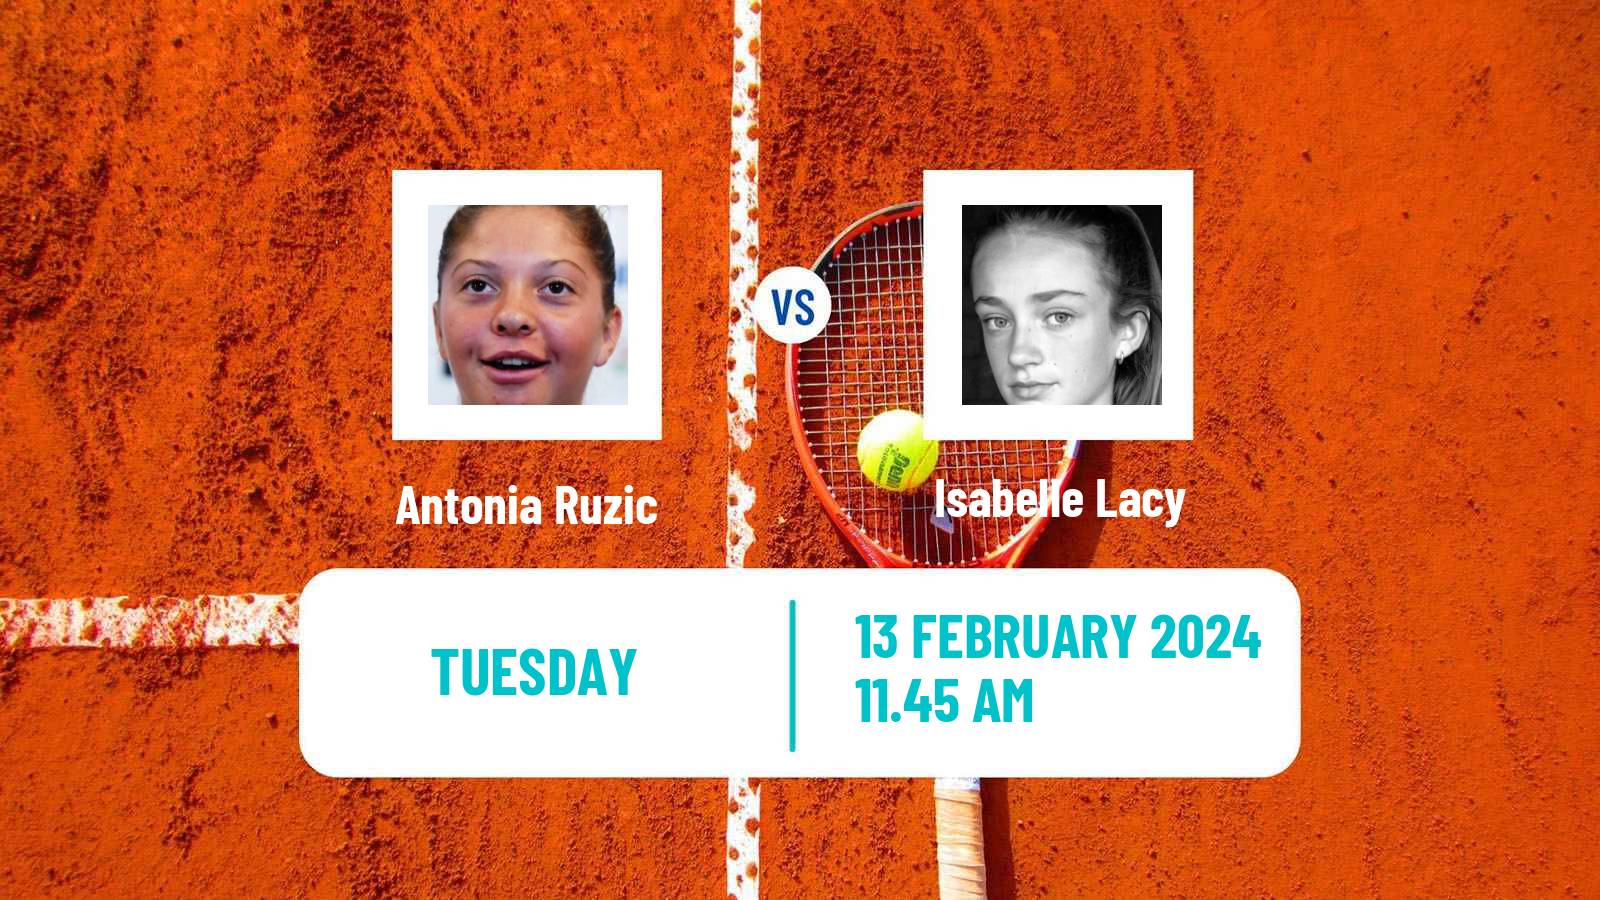 Tennis ITF W50 Roehampton Women Antonia Ruzic - Isabelle Lacy